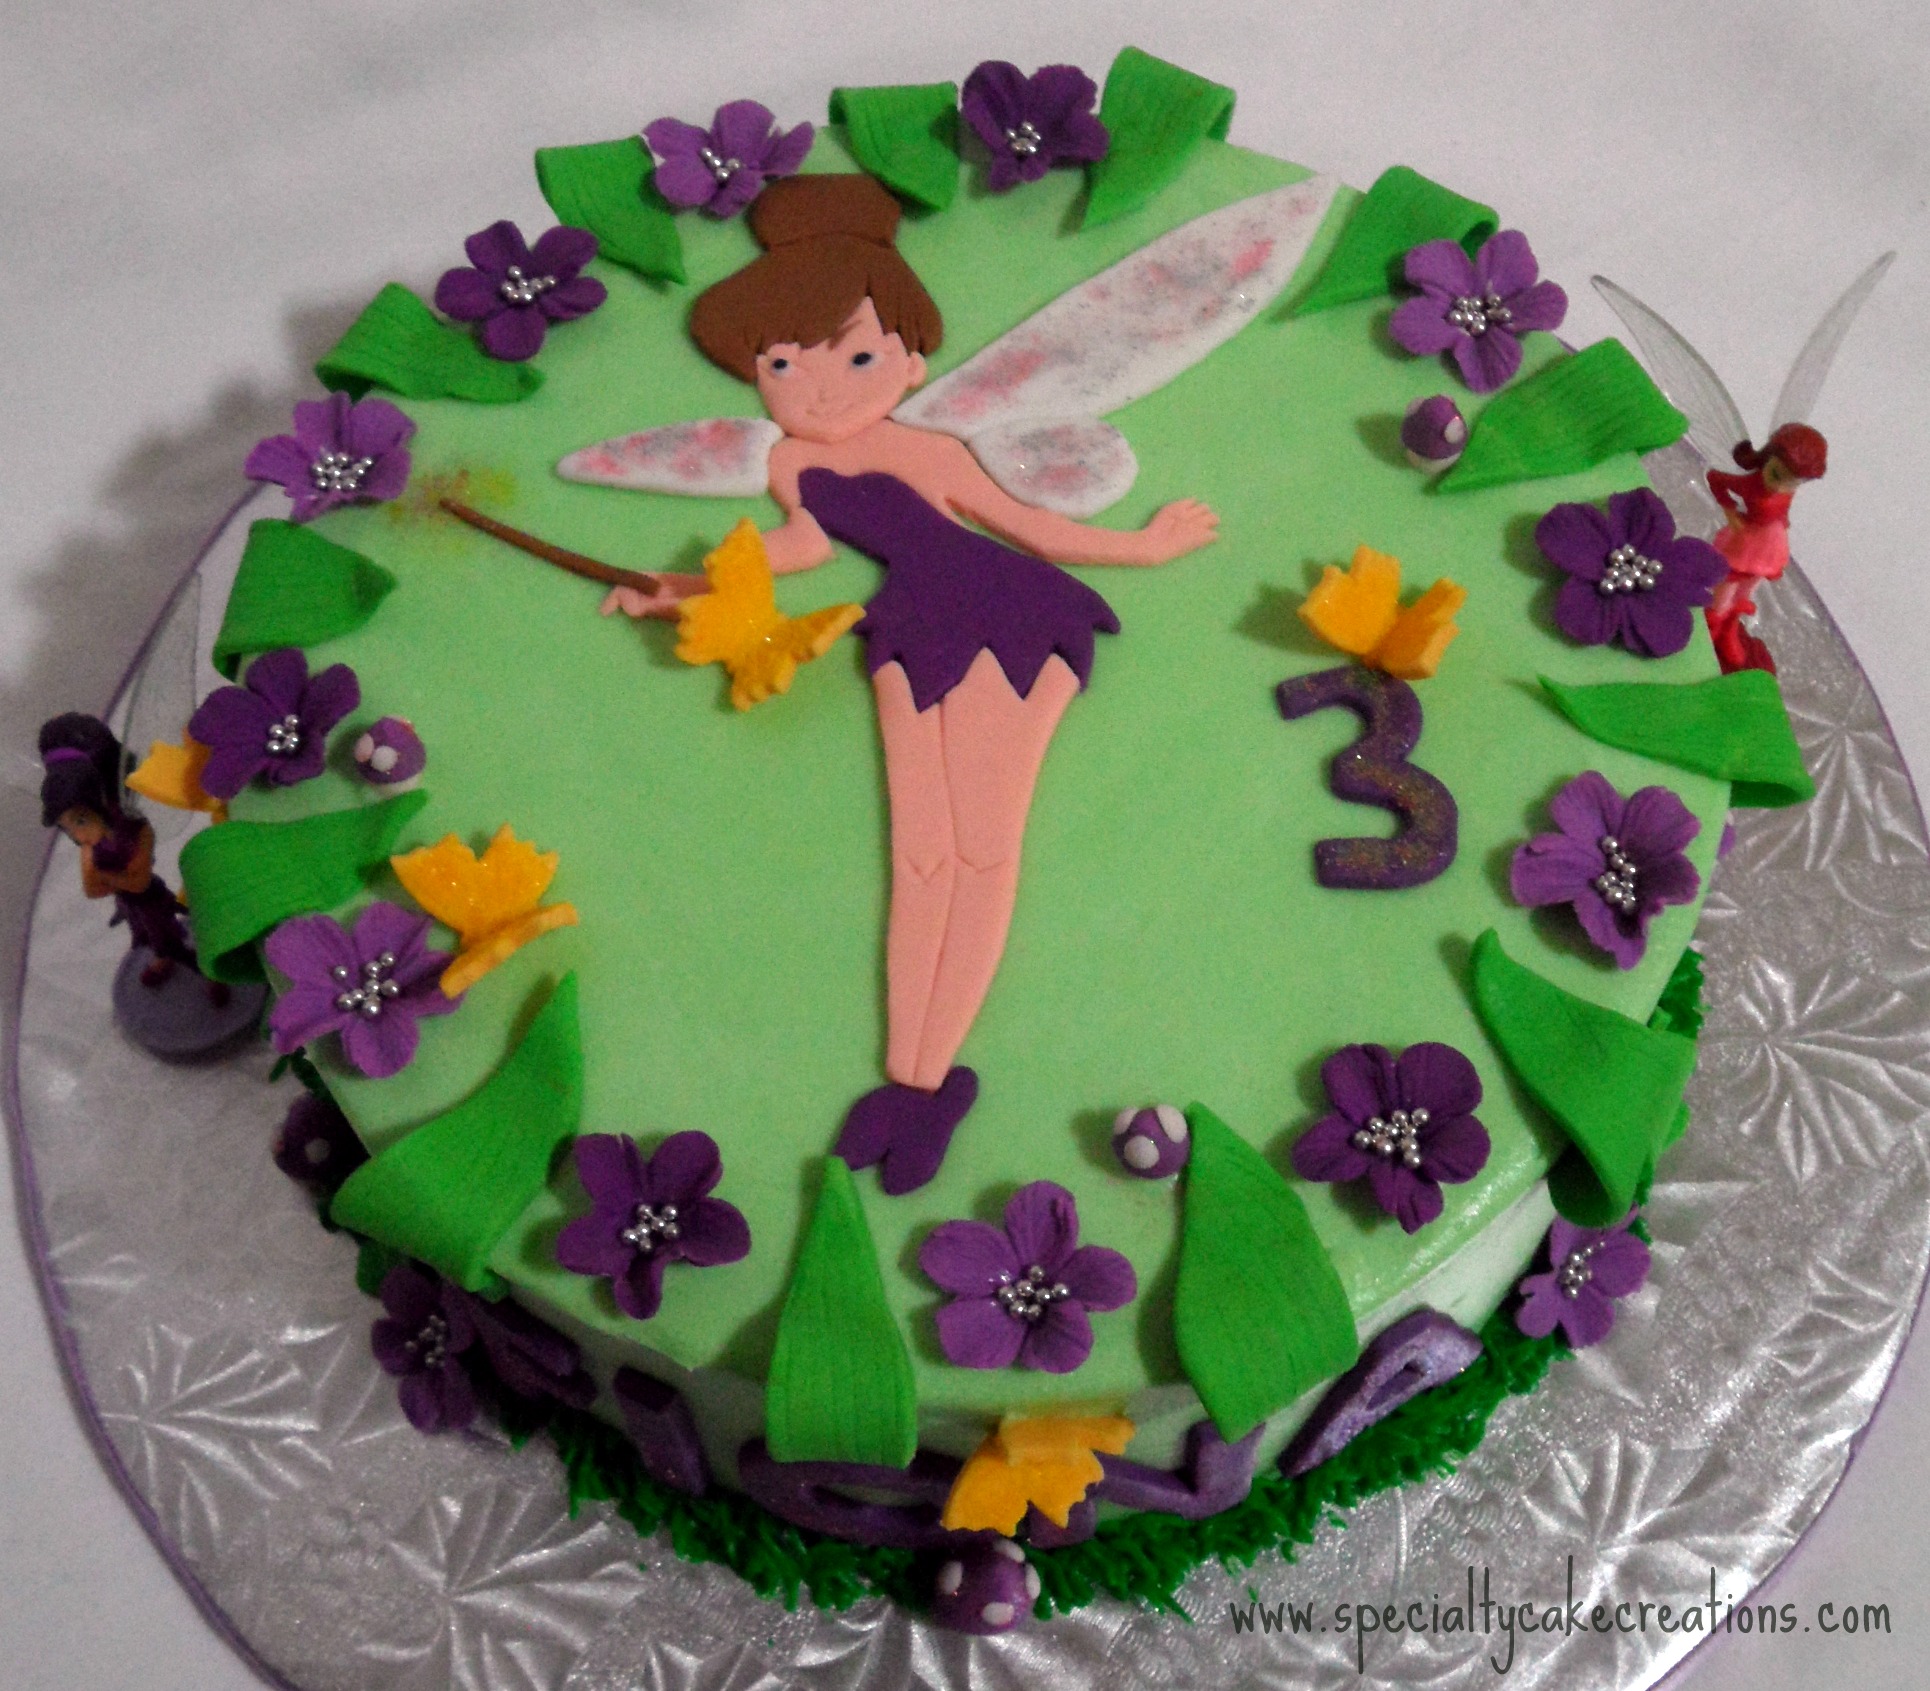 https://specialtycakecreations.com/wp-content/uploads/2011/08/Garden-Fairy-Cake.jpg